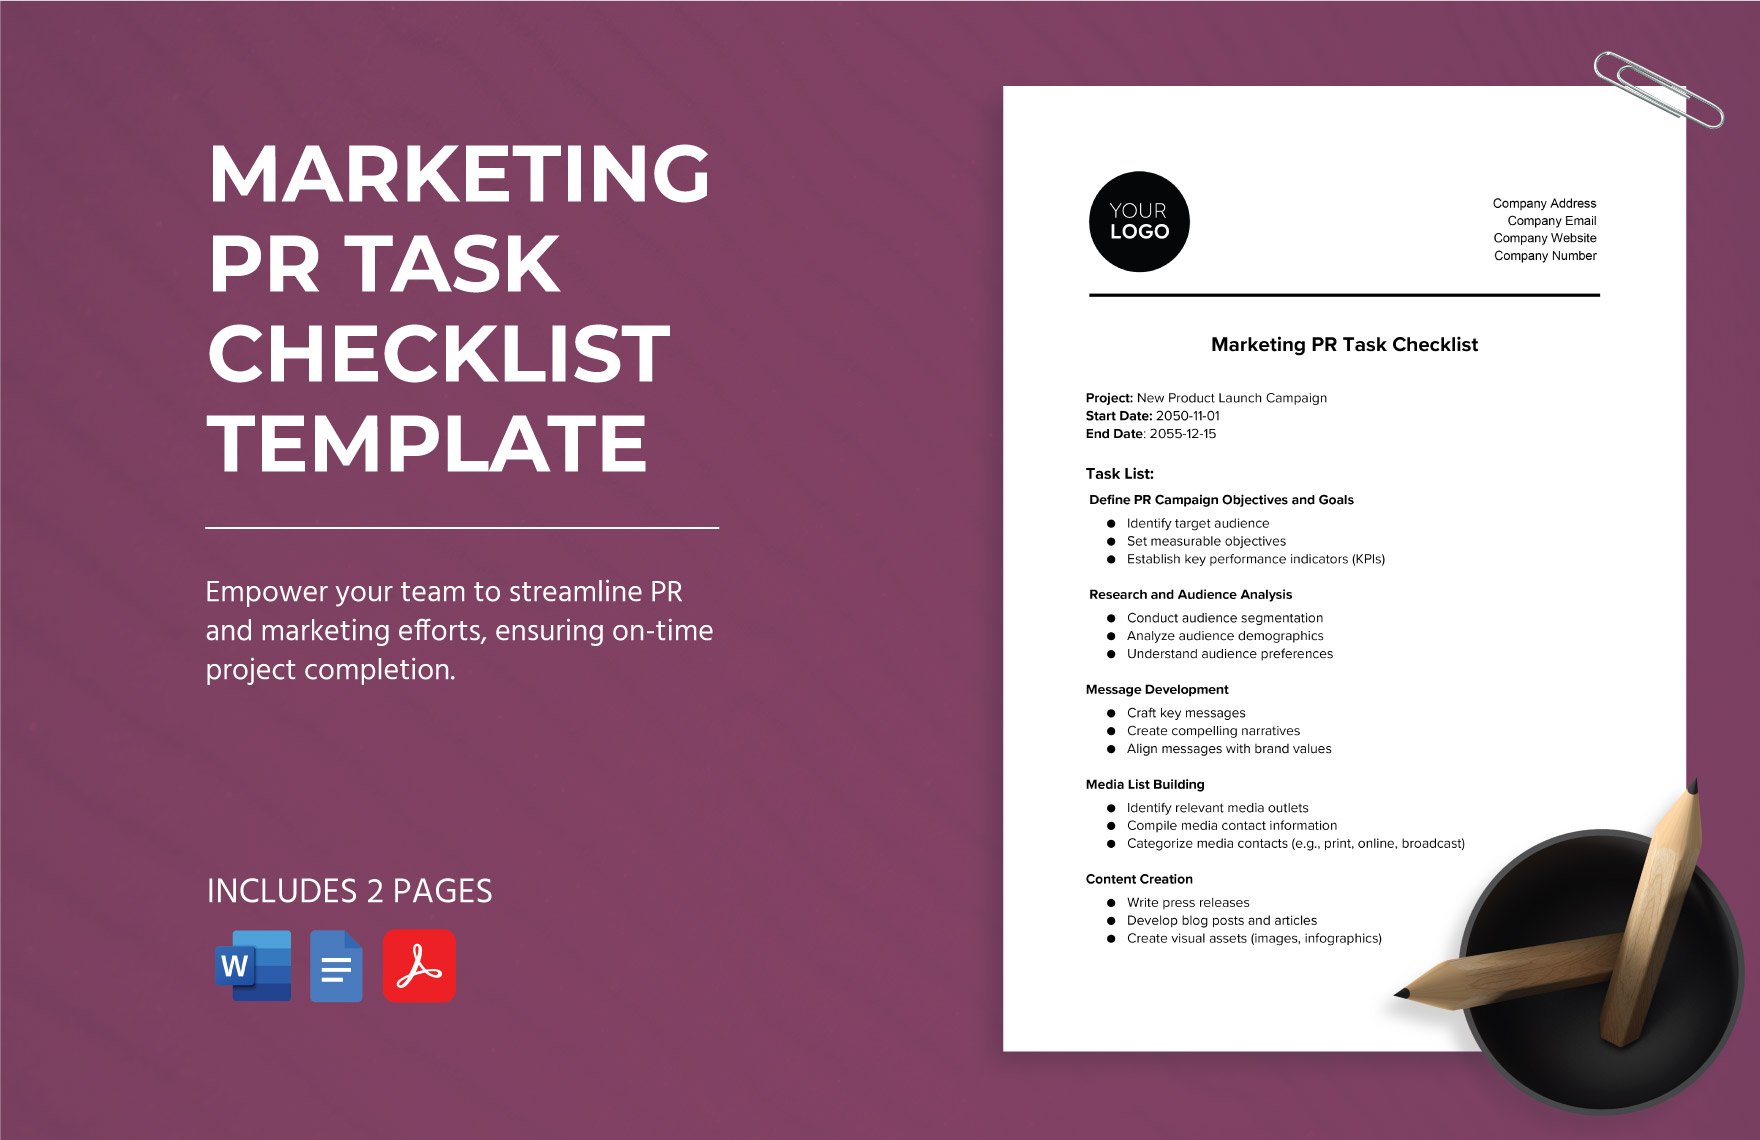 Marketing PR Task Checklist Template